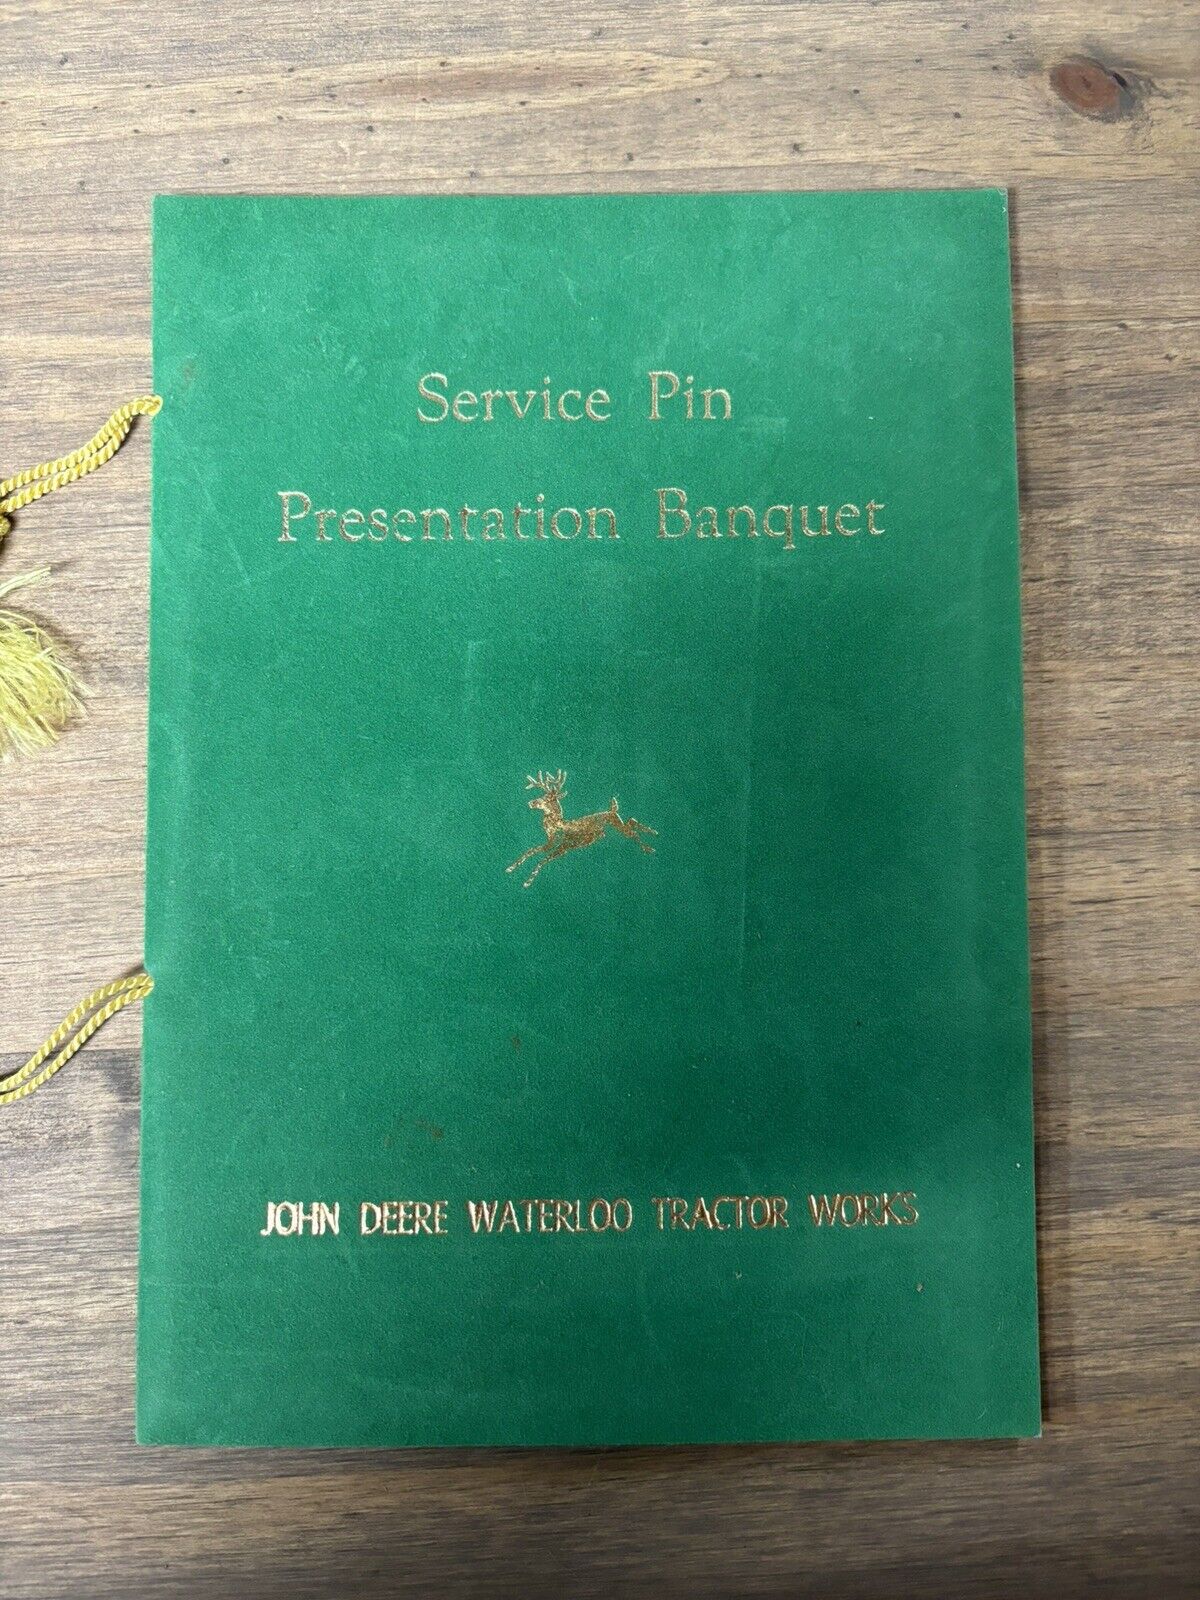 1968 John Deere Service Pin Presentation Banquet Program